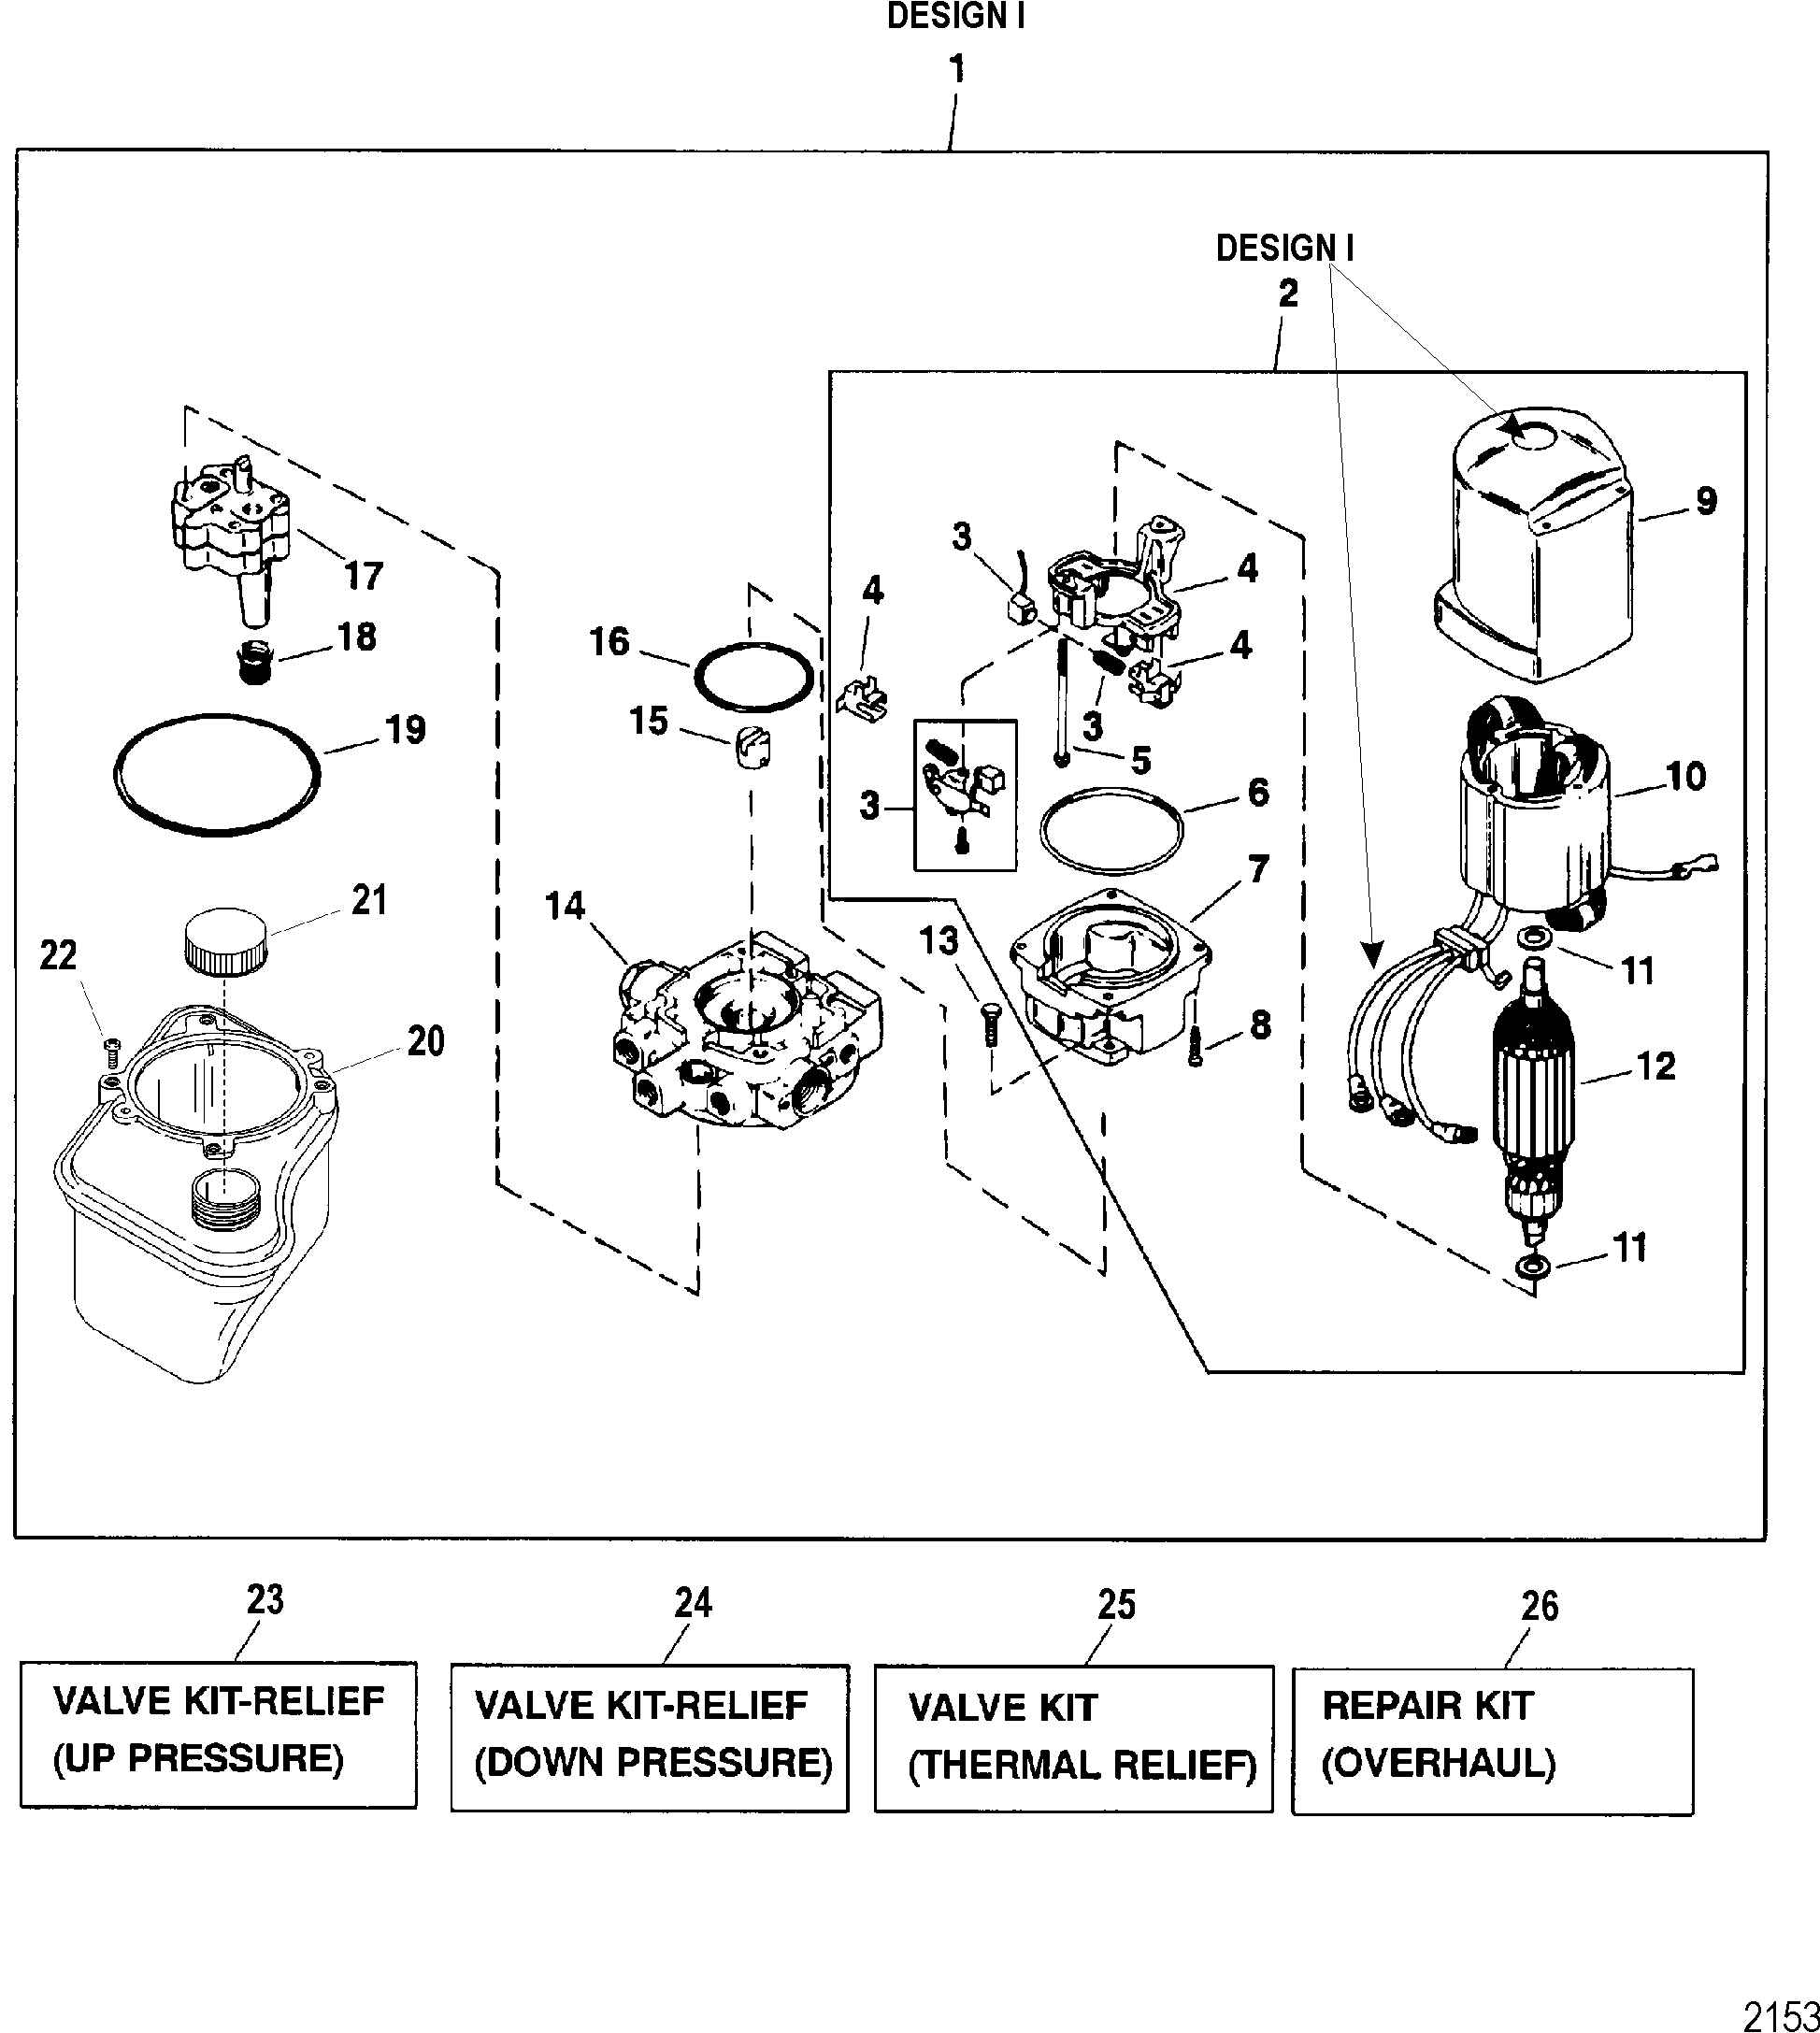 Pump/Motor(Top Mount Reservoir) (Design I - 14336A20)